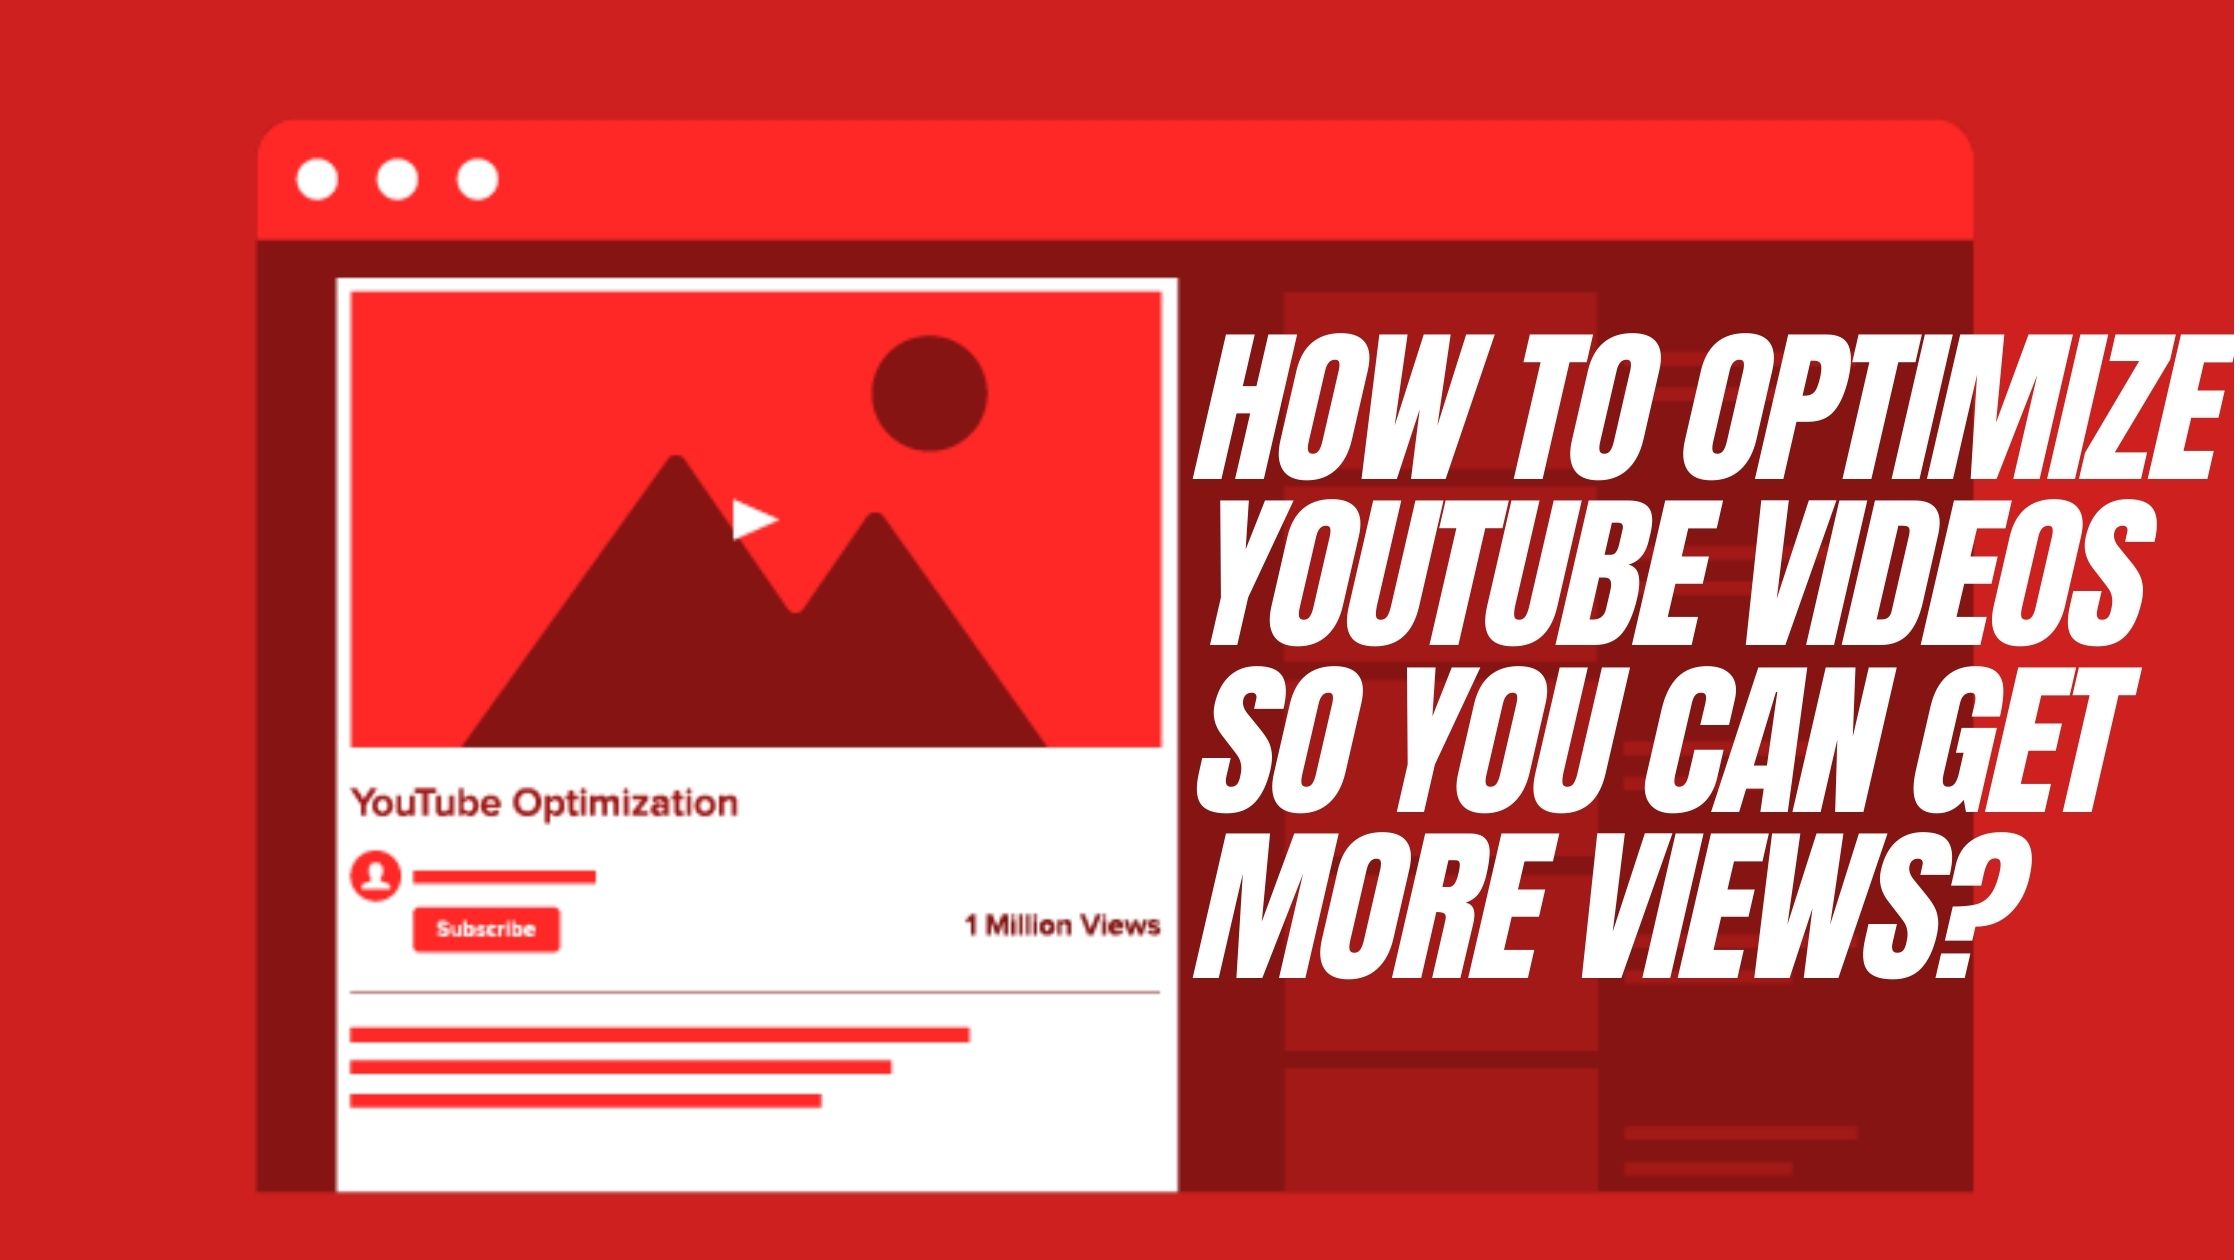 Optimize YouTube Videos